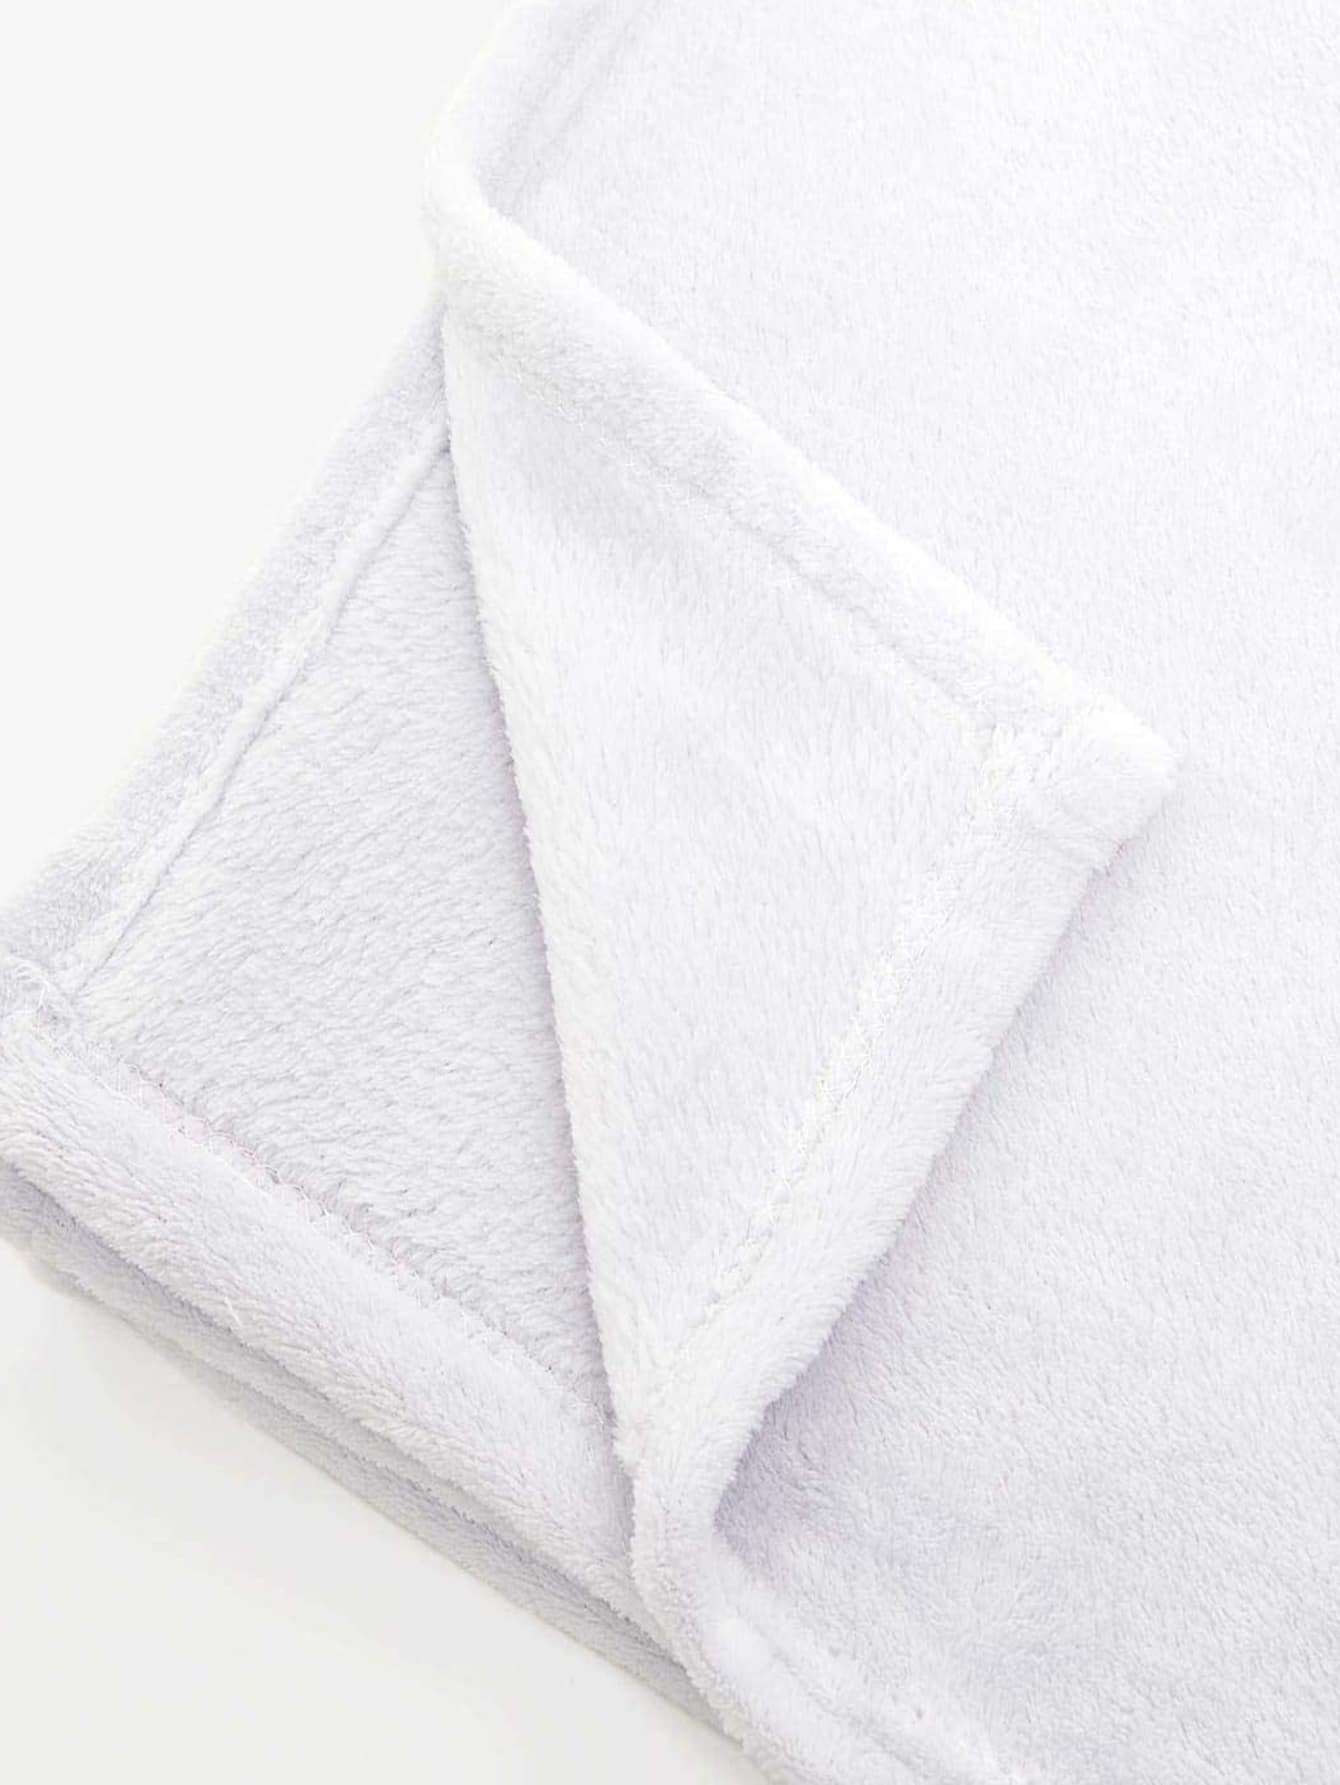 Stay Groovy Blanket Gift Flower & Mushroom Pattern Flannel Blanket Grove ShopOnlyDeal